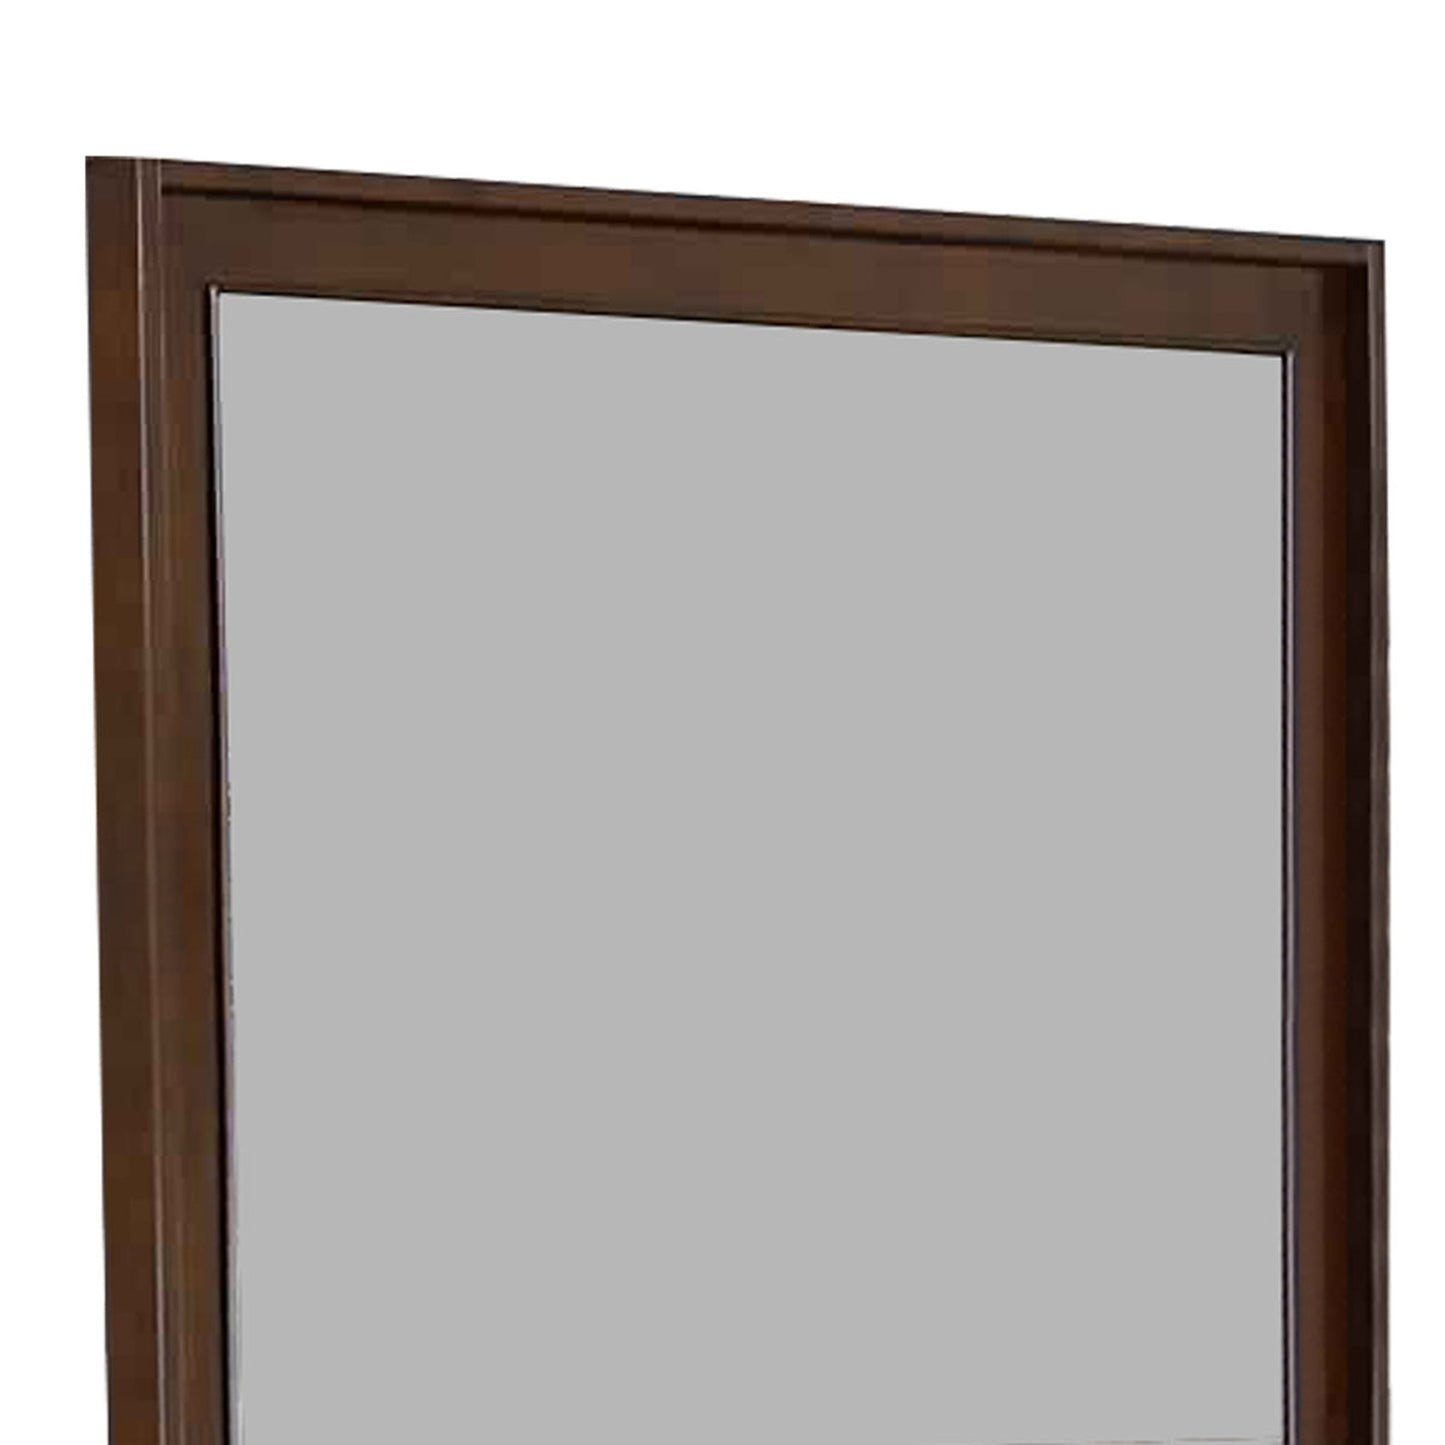 Benzara Brown Rectangular Wooden Frame Mirror With Raised Edges